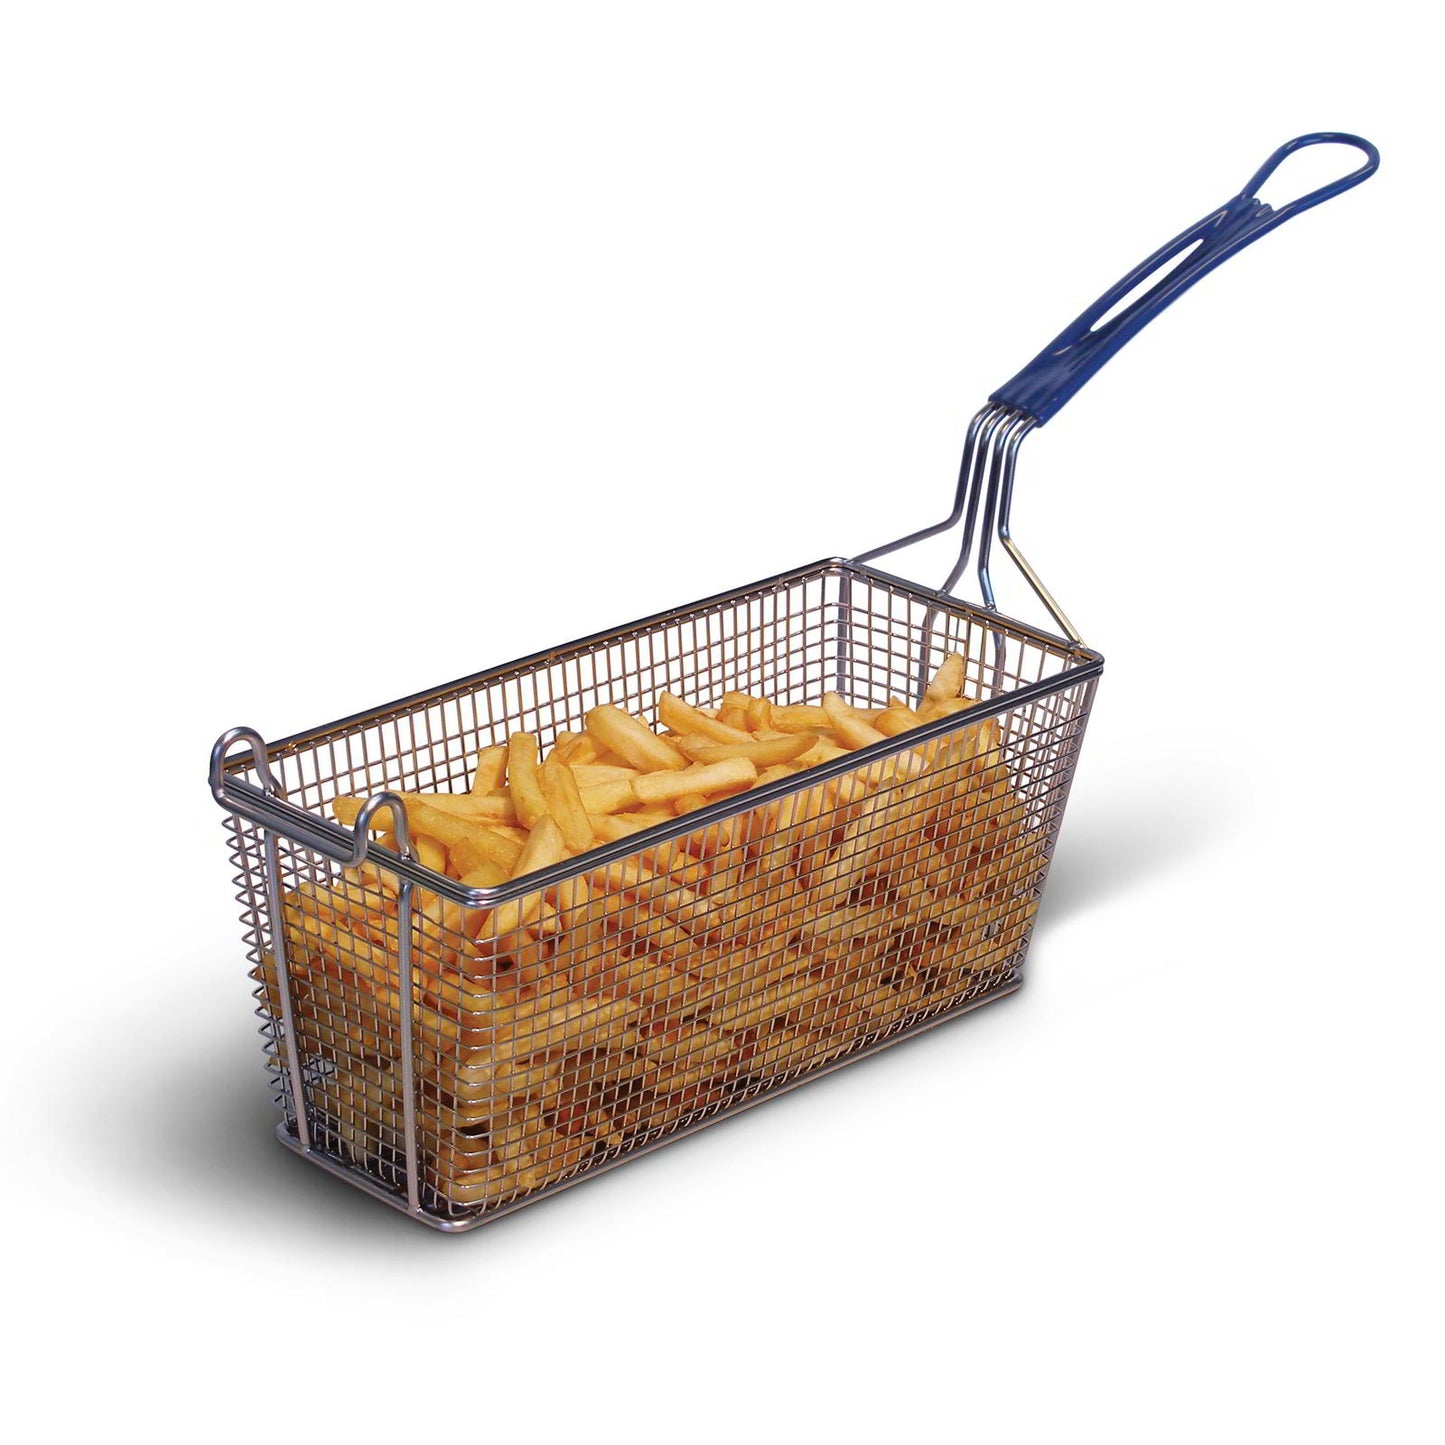 Austheat Freestanding Electric Fryer rapid recovery, 3 baskets